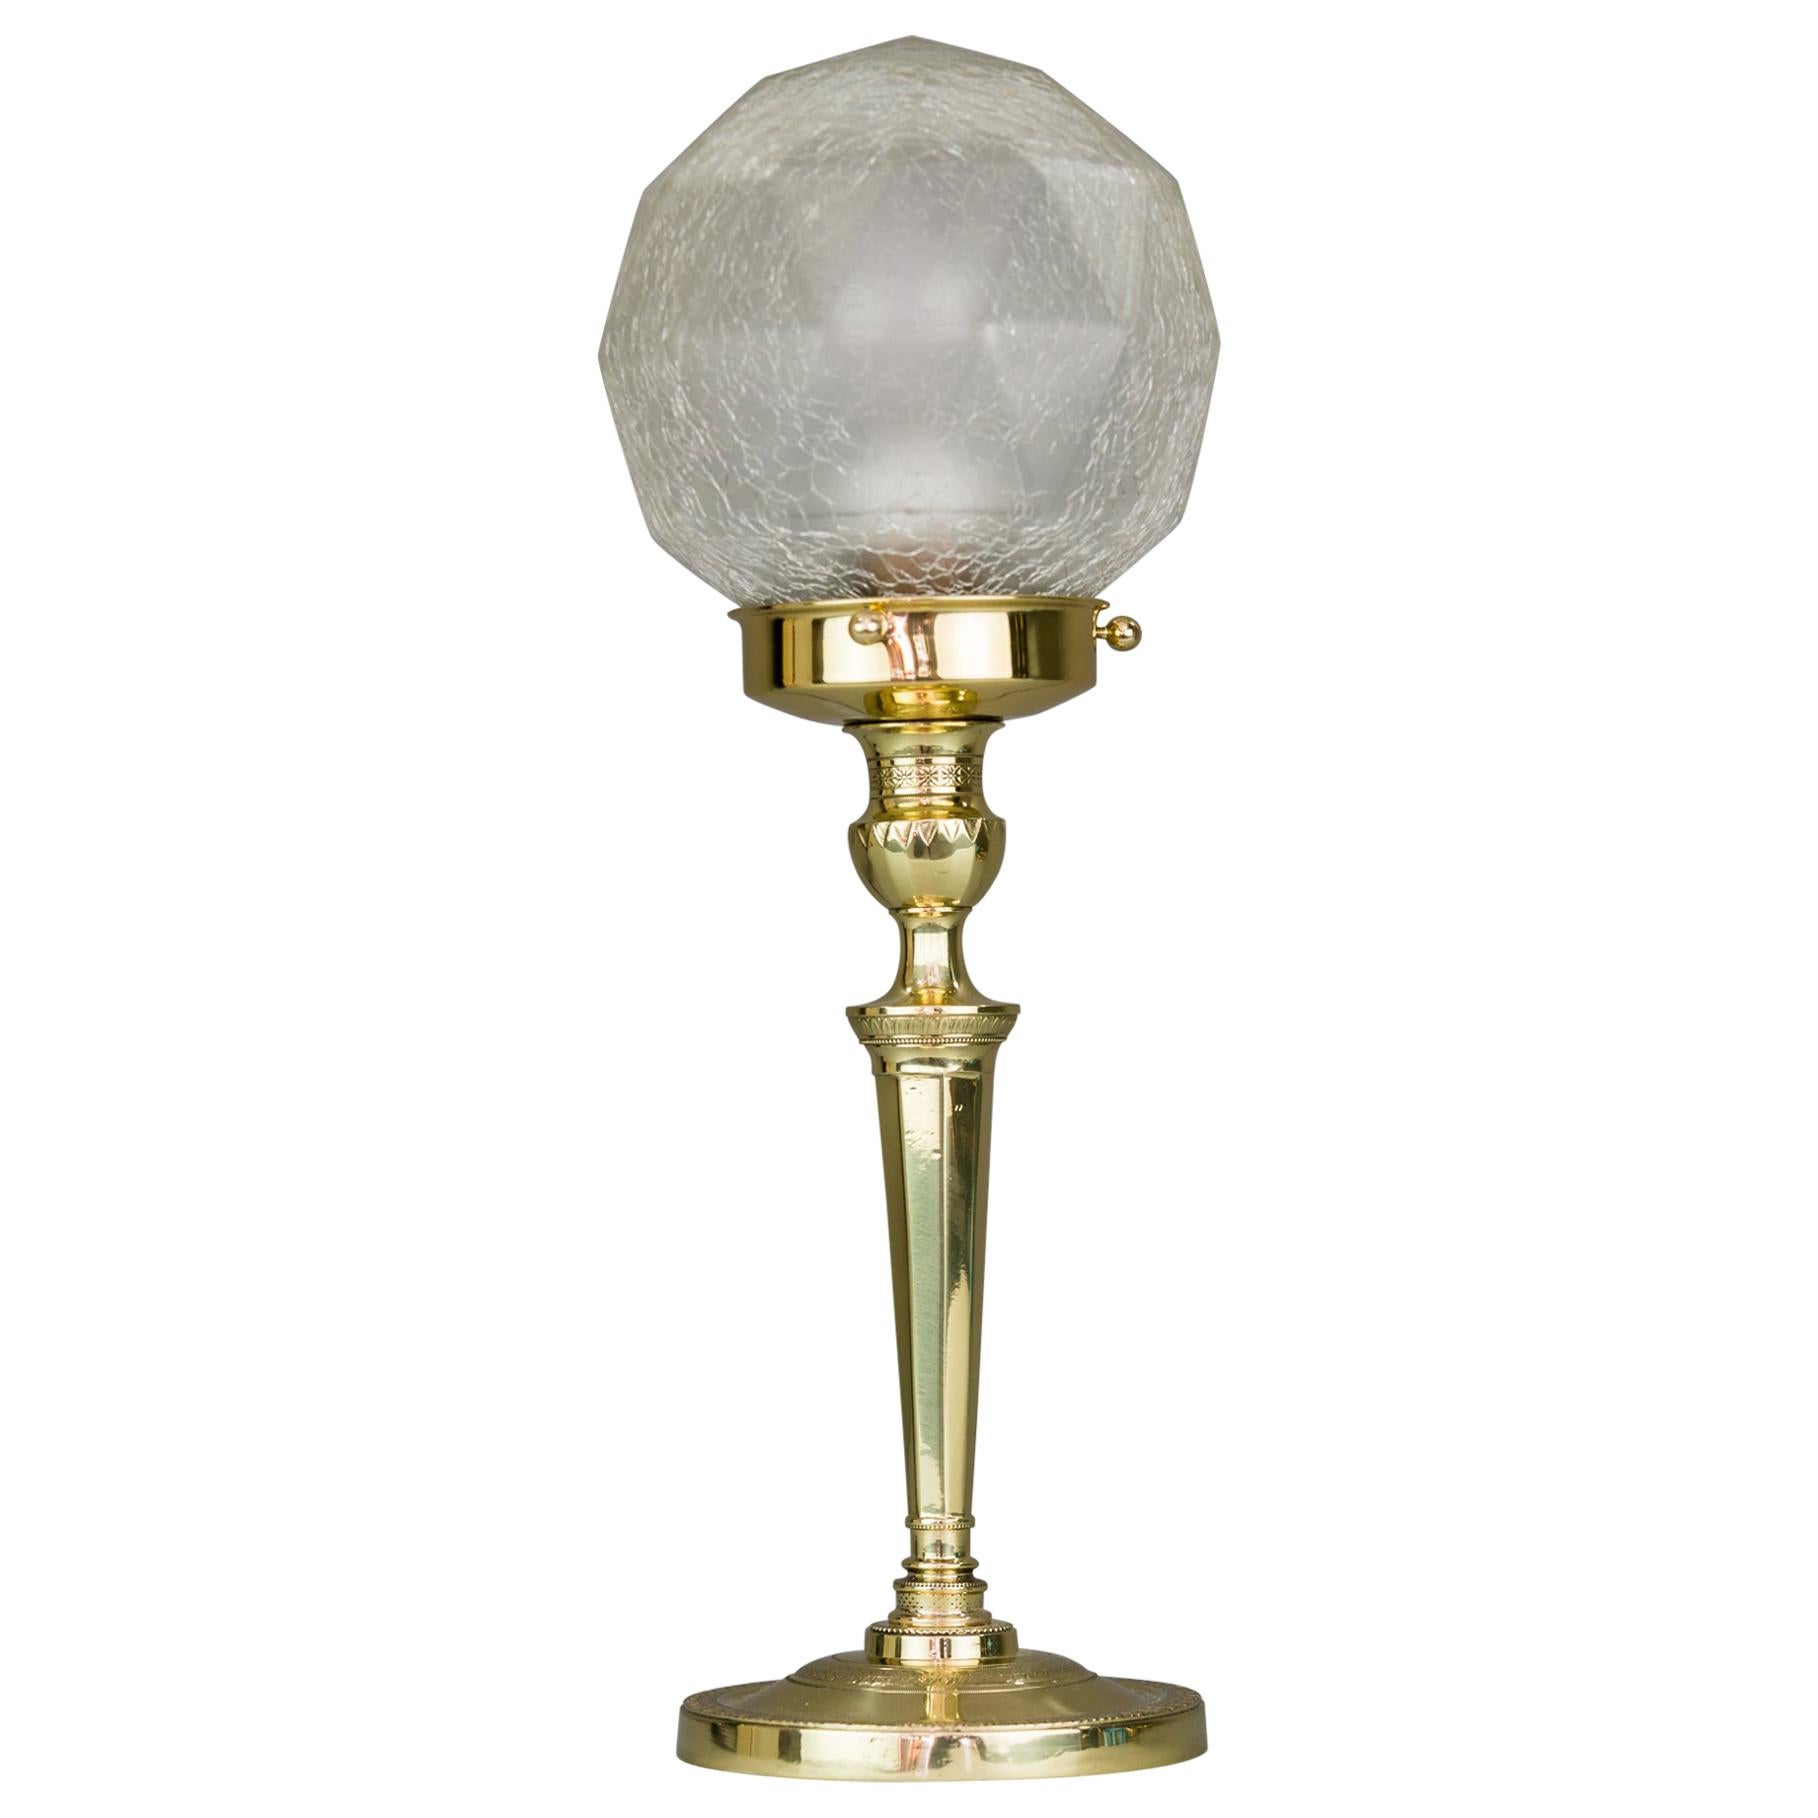 Art Deco Table Lamp with Original Glass Shade, circa 1920s